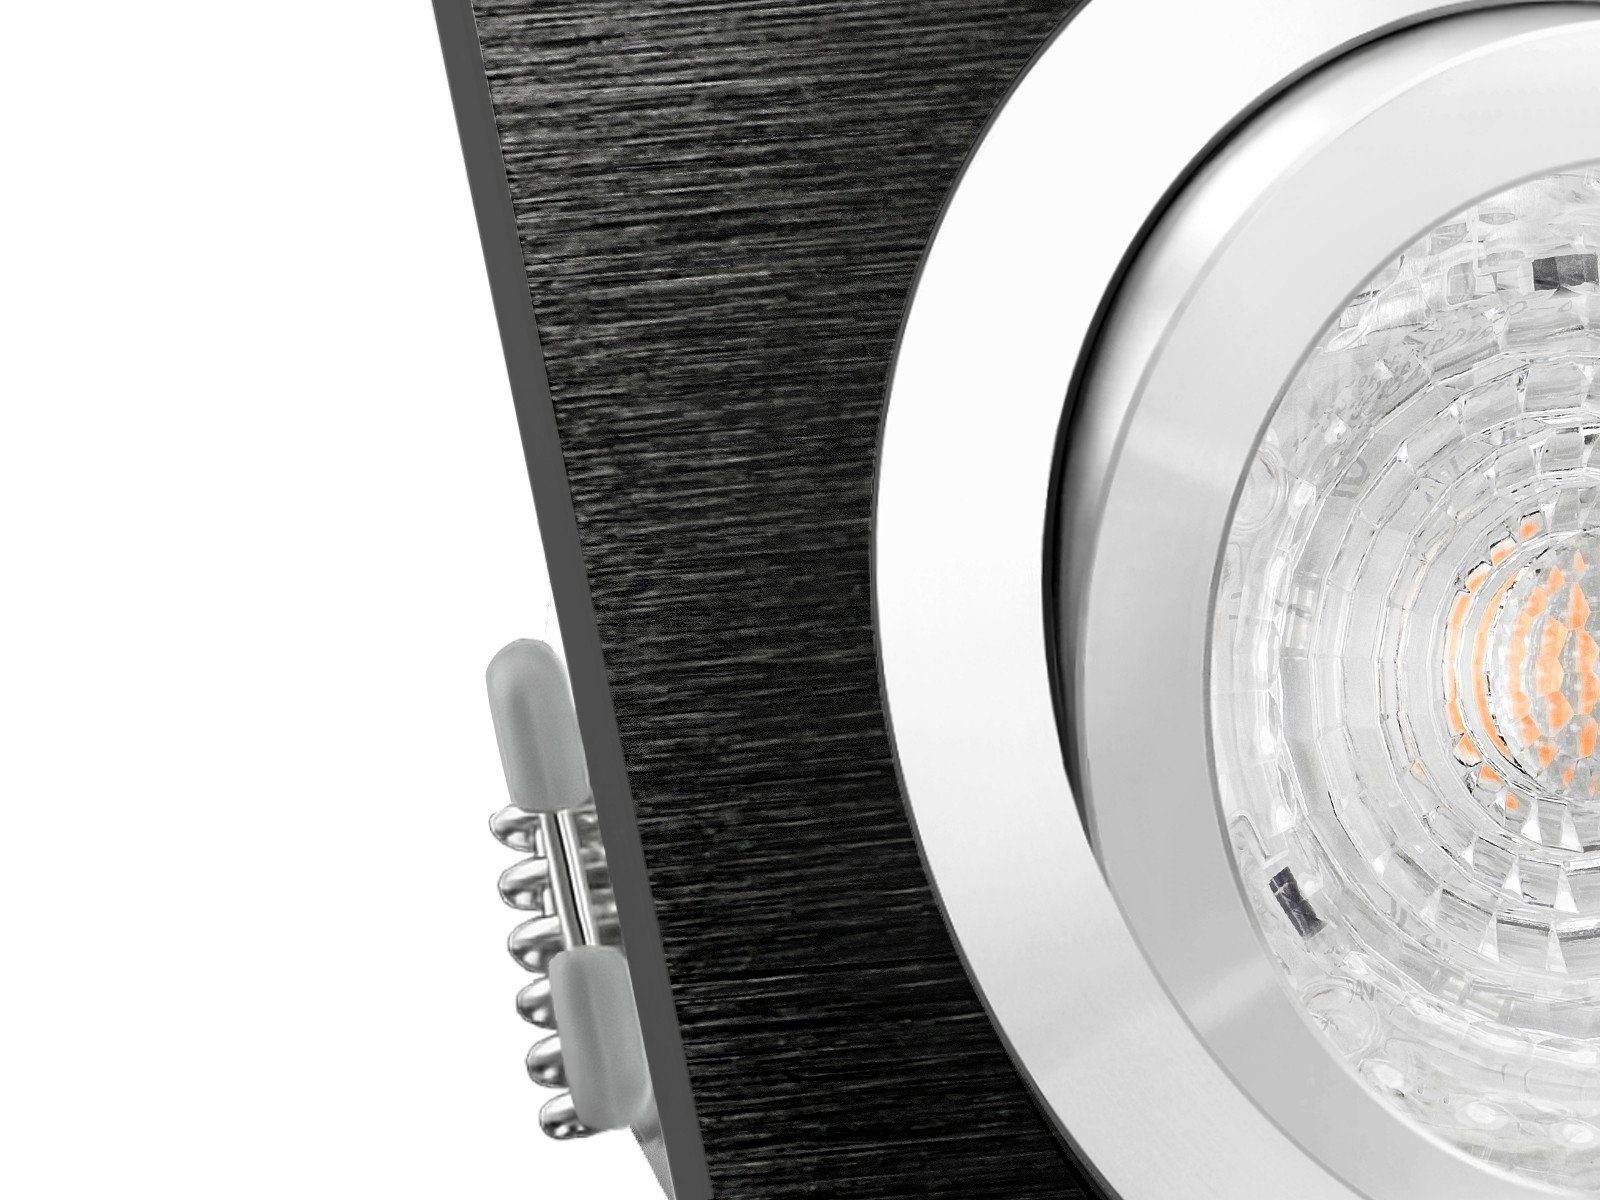 SSC-LUXon LED Einbaustrahler QF-2 LED-Einbauleuchte Spot 4,9W schwenkbar, warm schwarz Alu LED